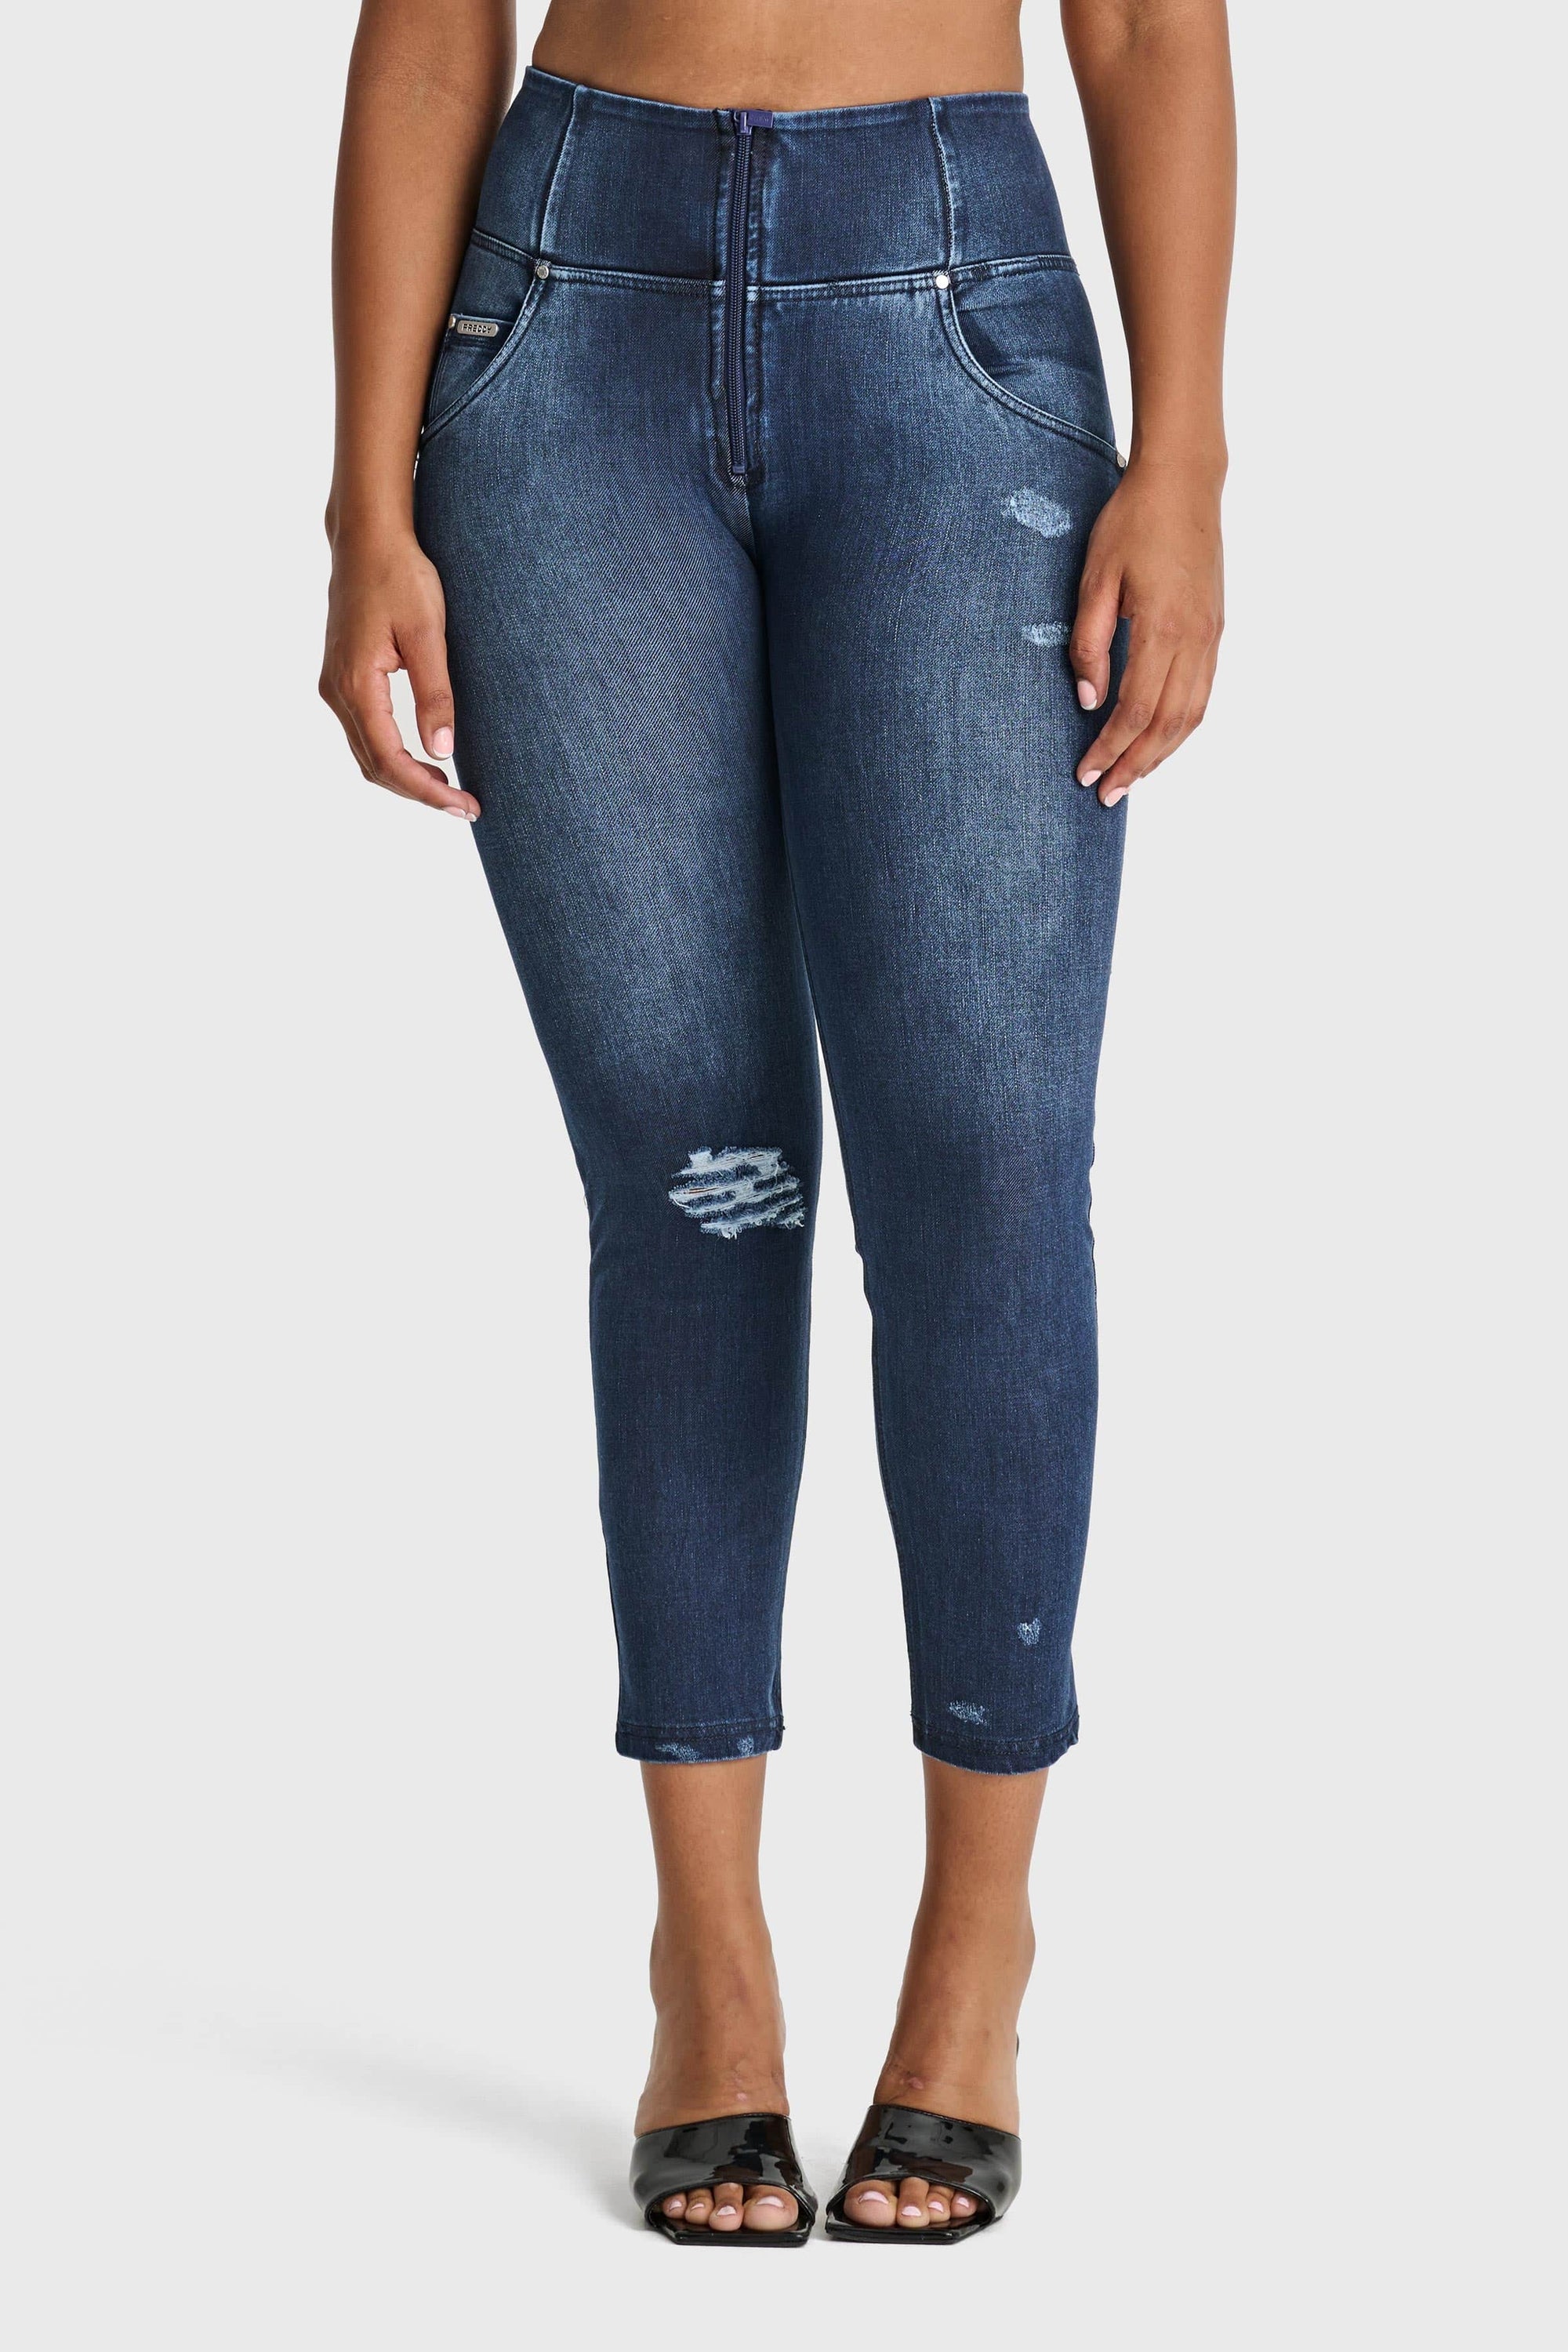 WR.UP® Snug Distressed Jeans - High Waisted - 7/8 Length - Dark Blue + Blue Stitching 8